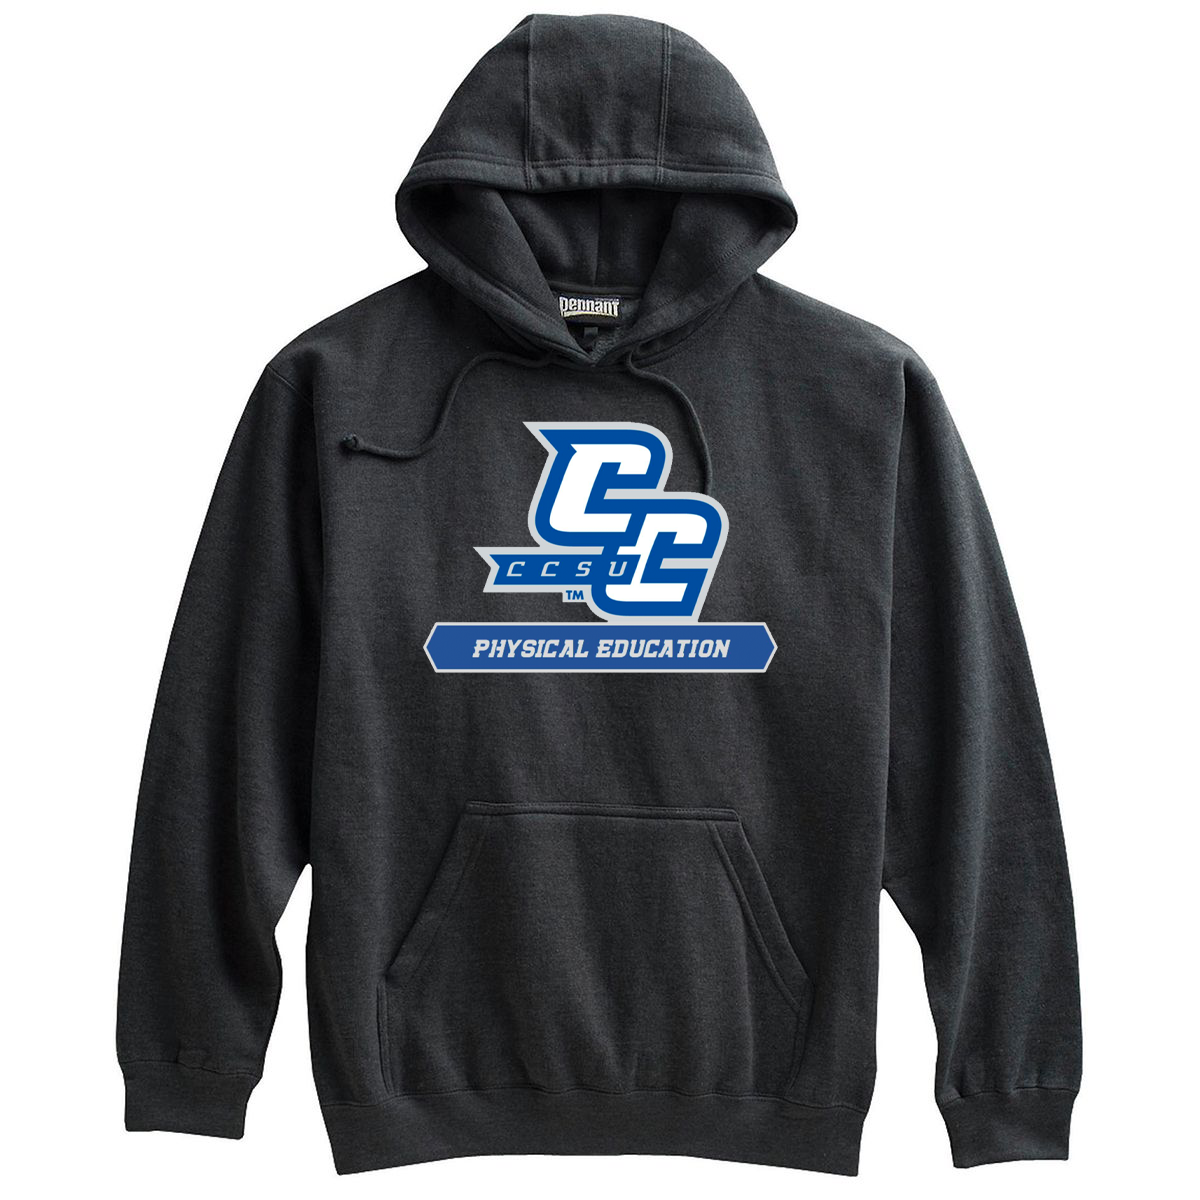 CCSU PE Club Sweatshirt